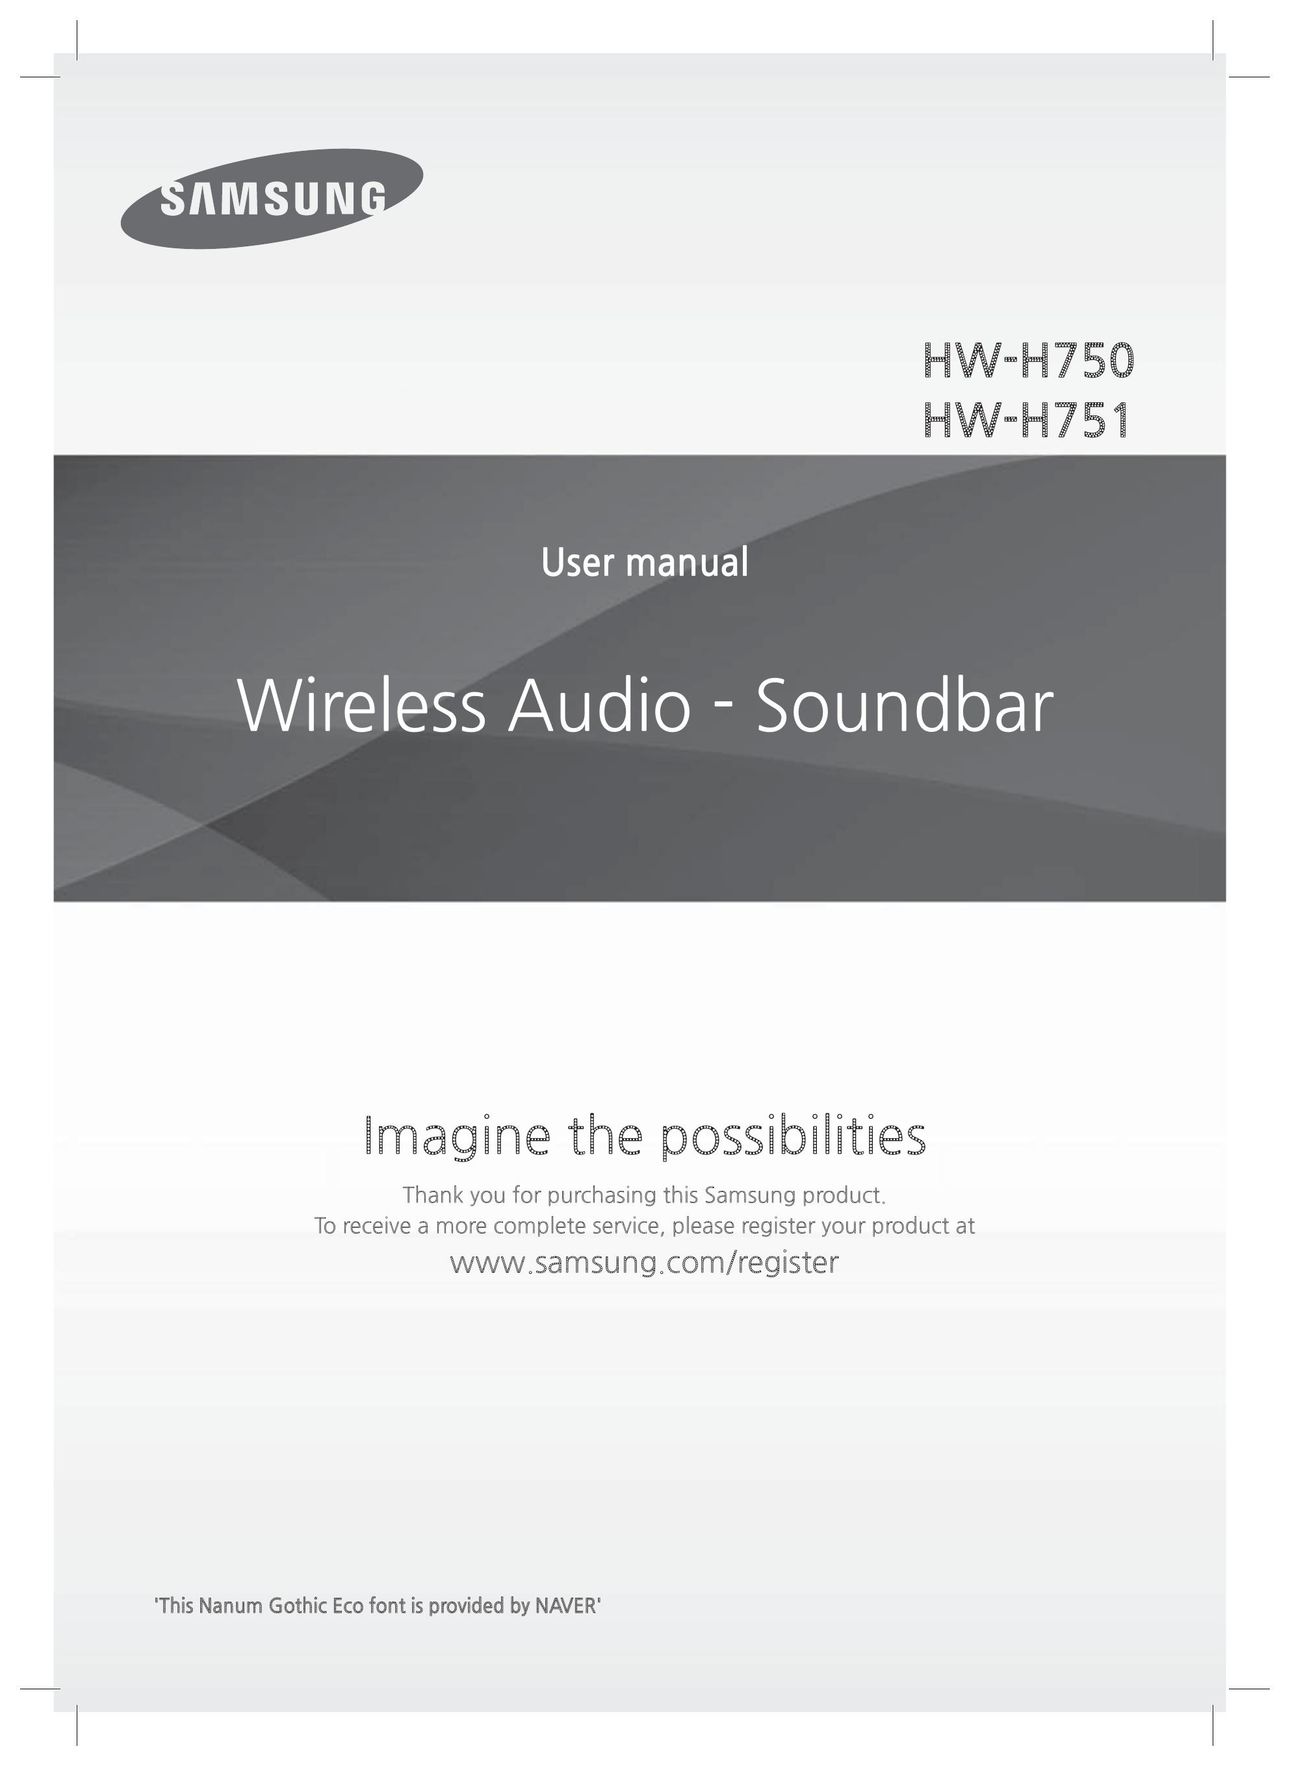 Samsung HWH750 Speaker User Manual